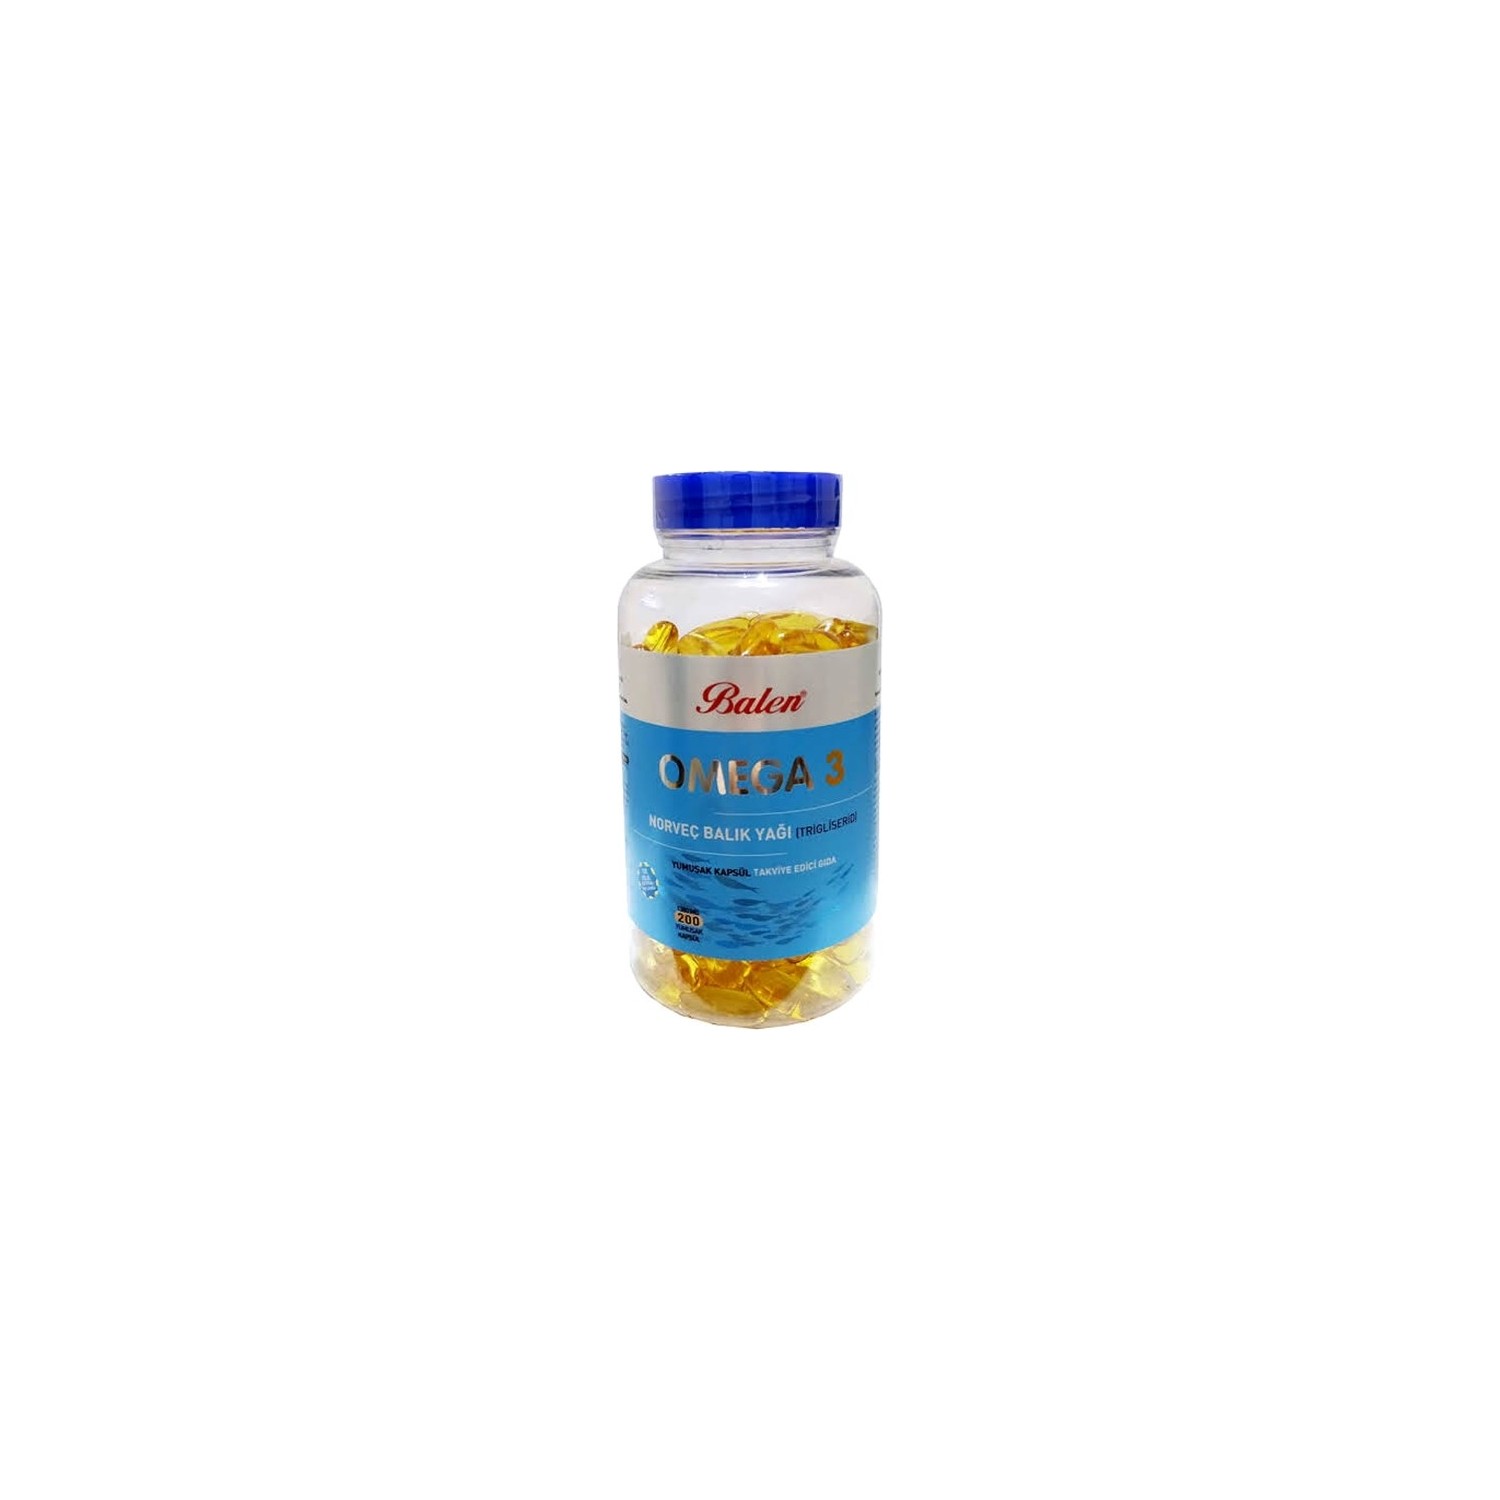 Норвежский рыбий жир Balen Omega-3 (триглицерид) 1380 мг, 200 капсул норвежский рыбий жир balen omega 3 триглицерид 1380 мг 2 упаковки по 100 капсул